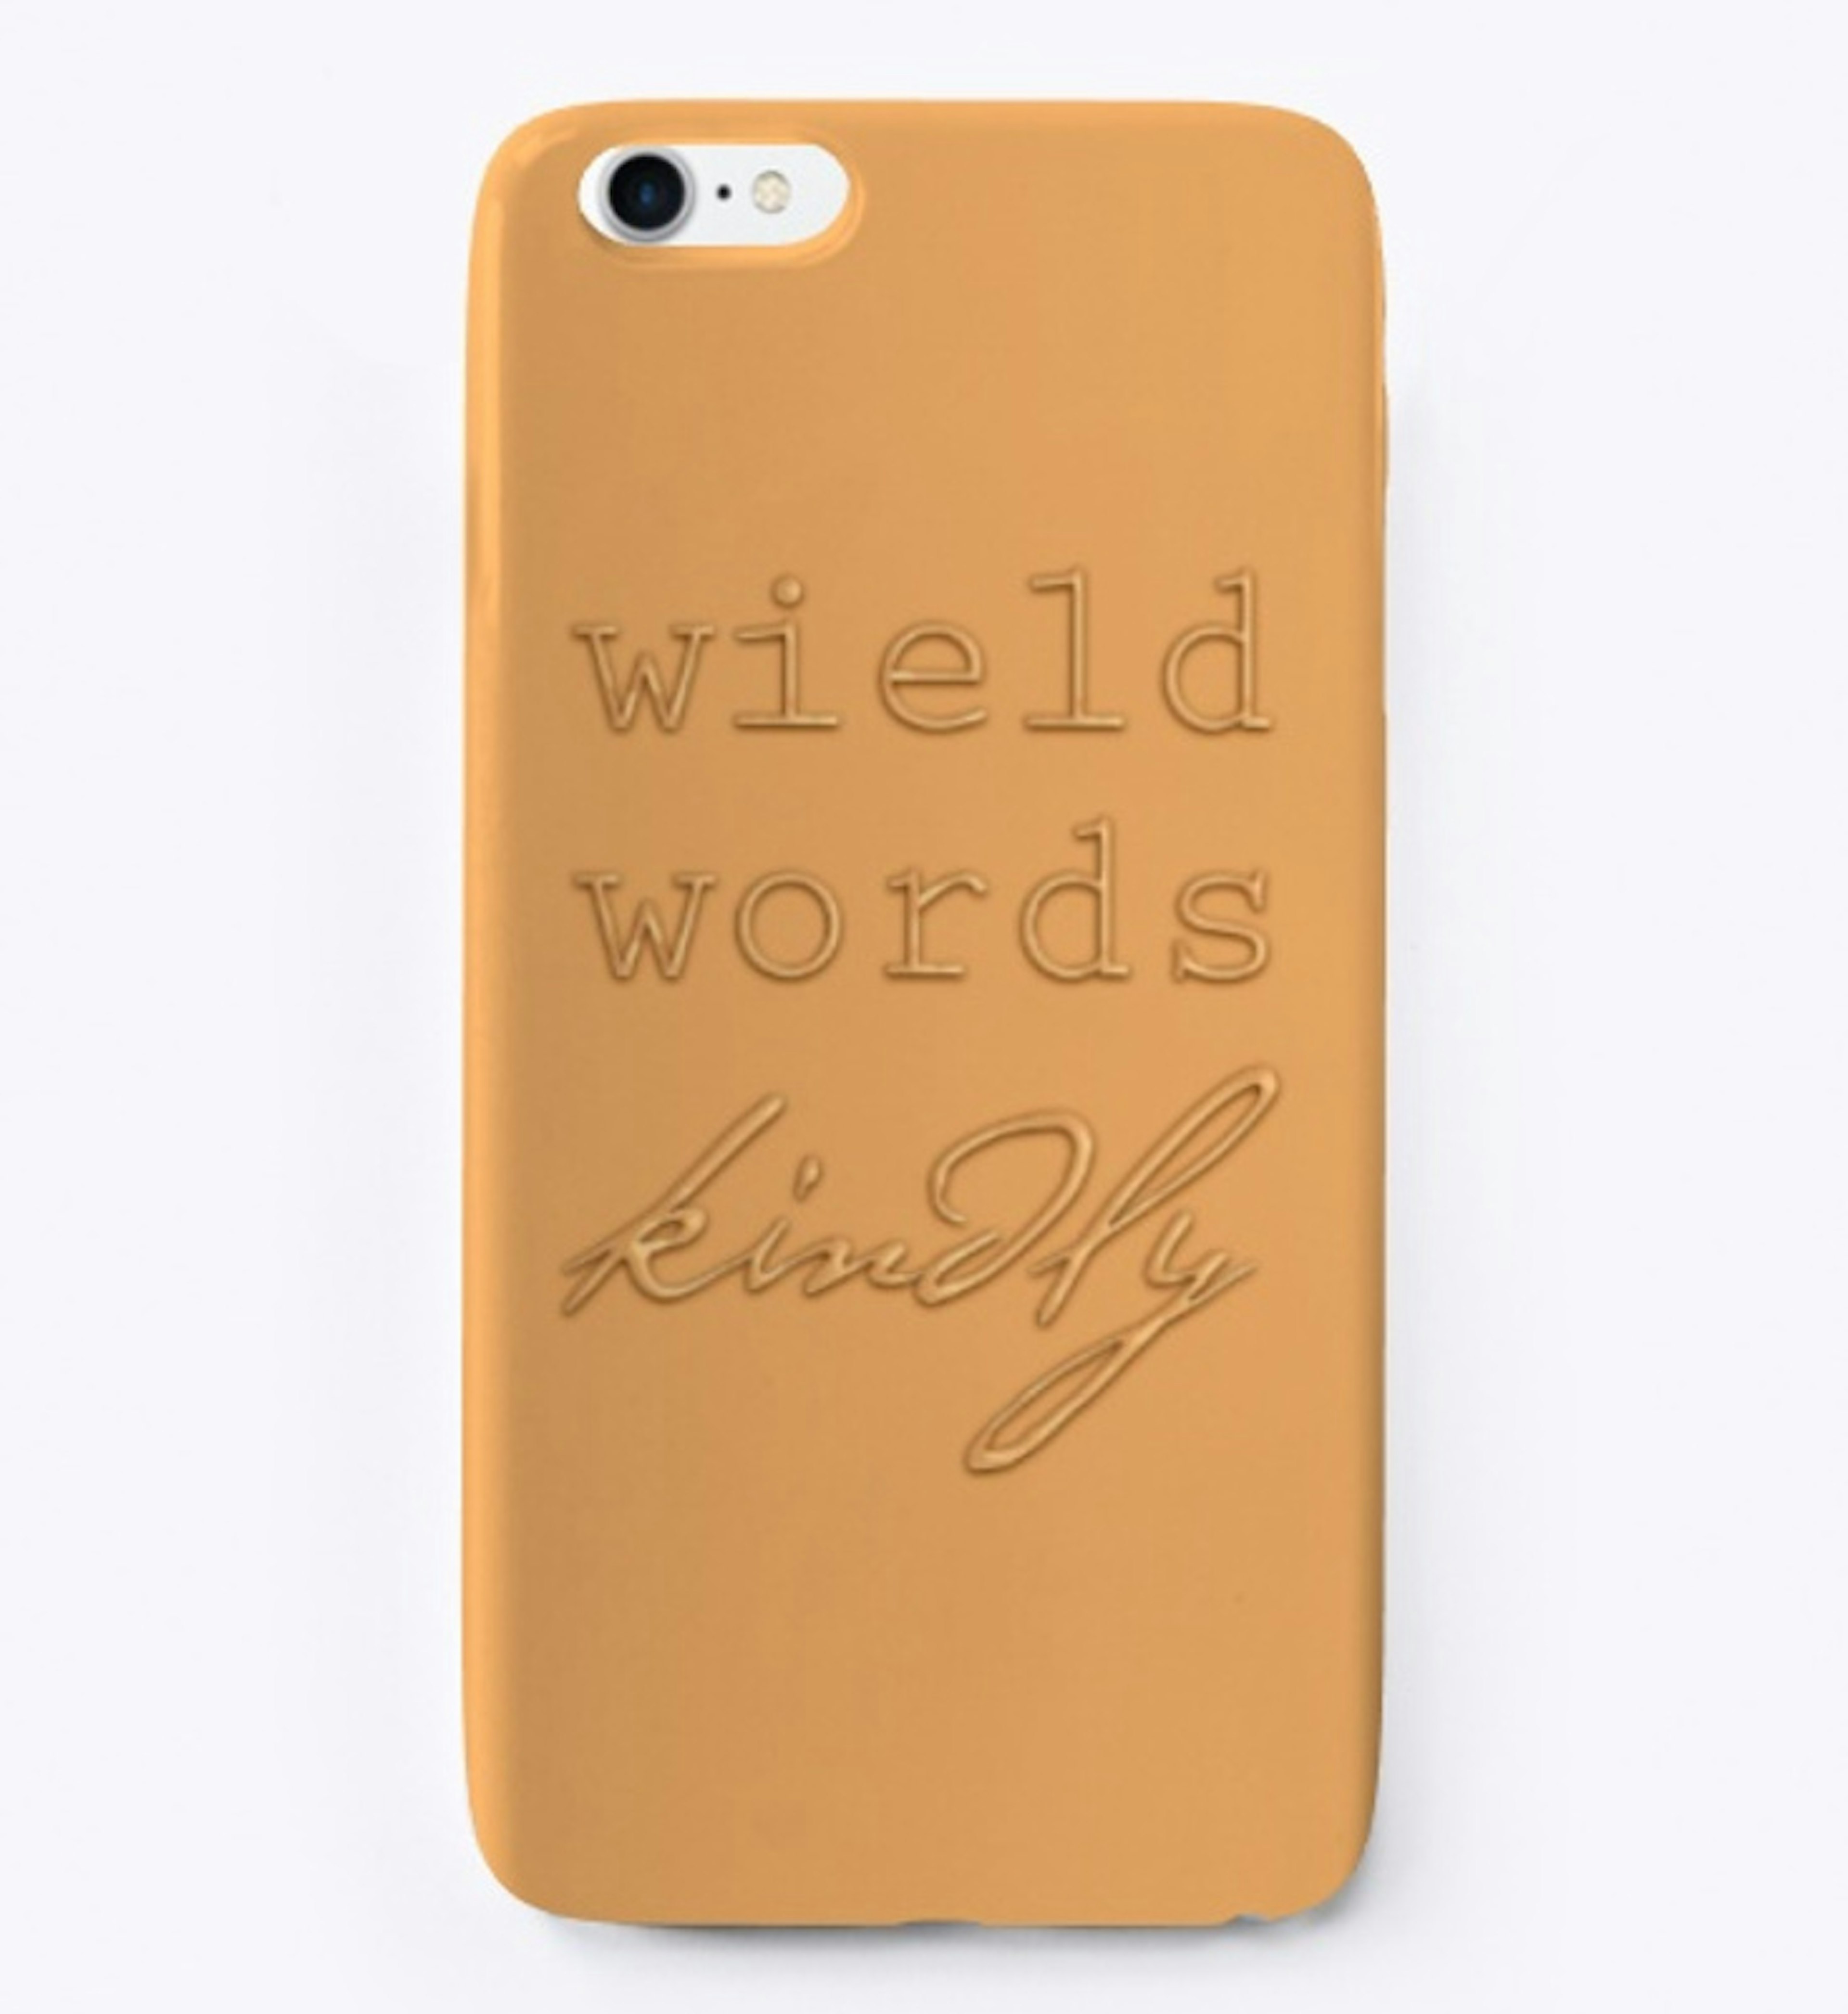 Wield Words Kindly - Mustard